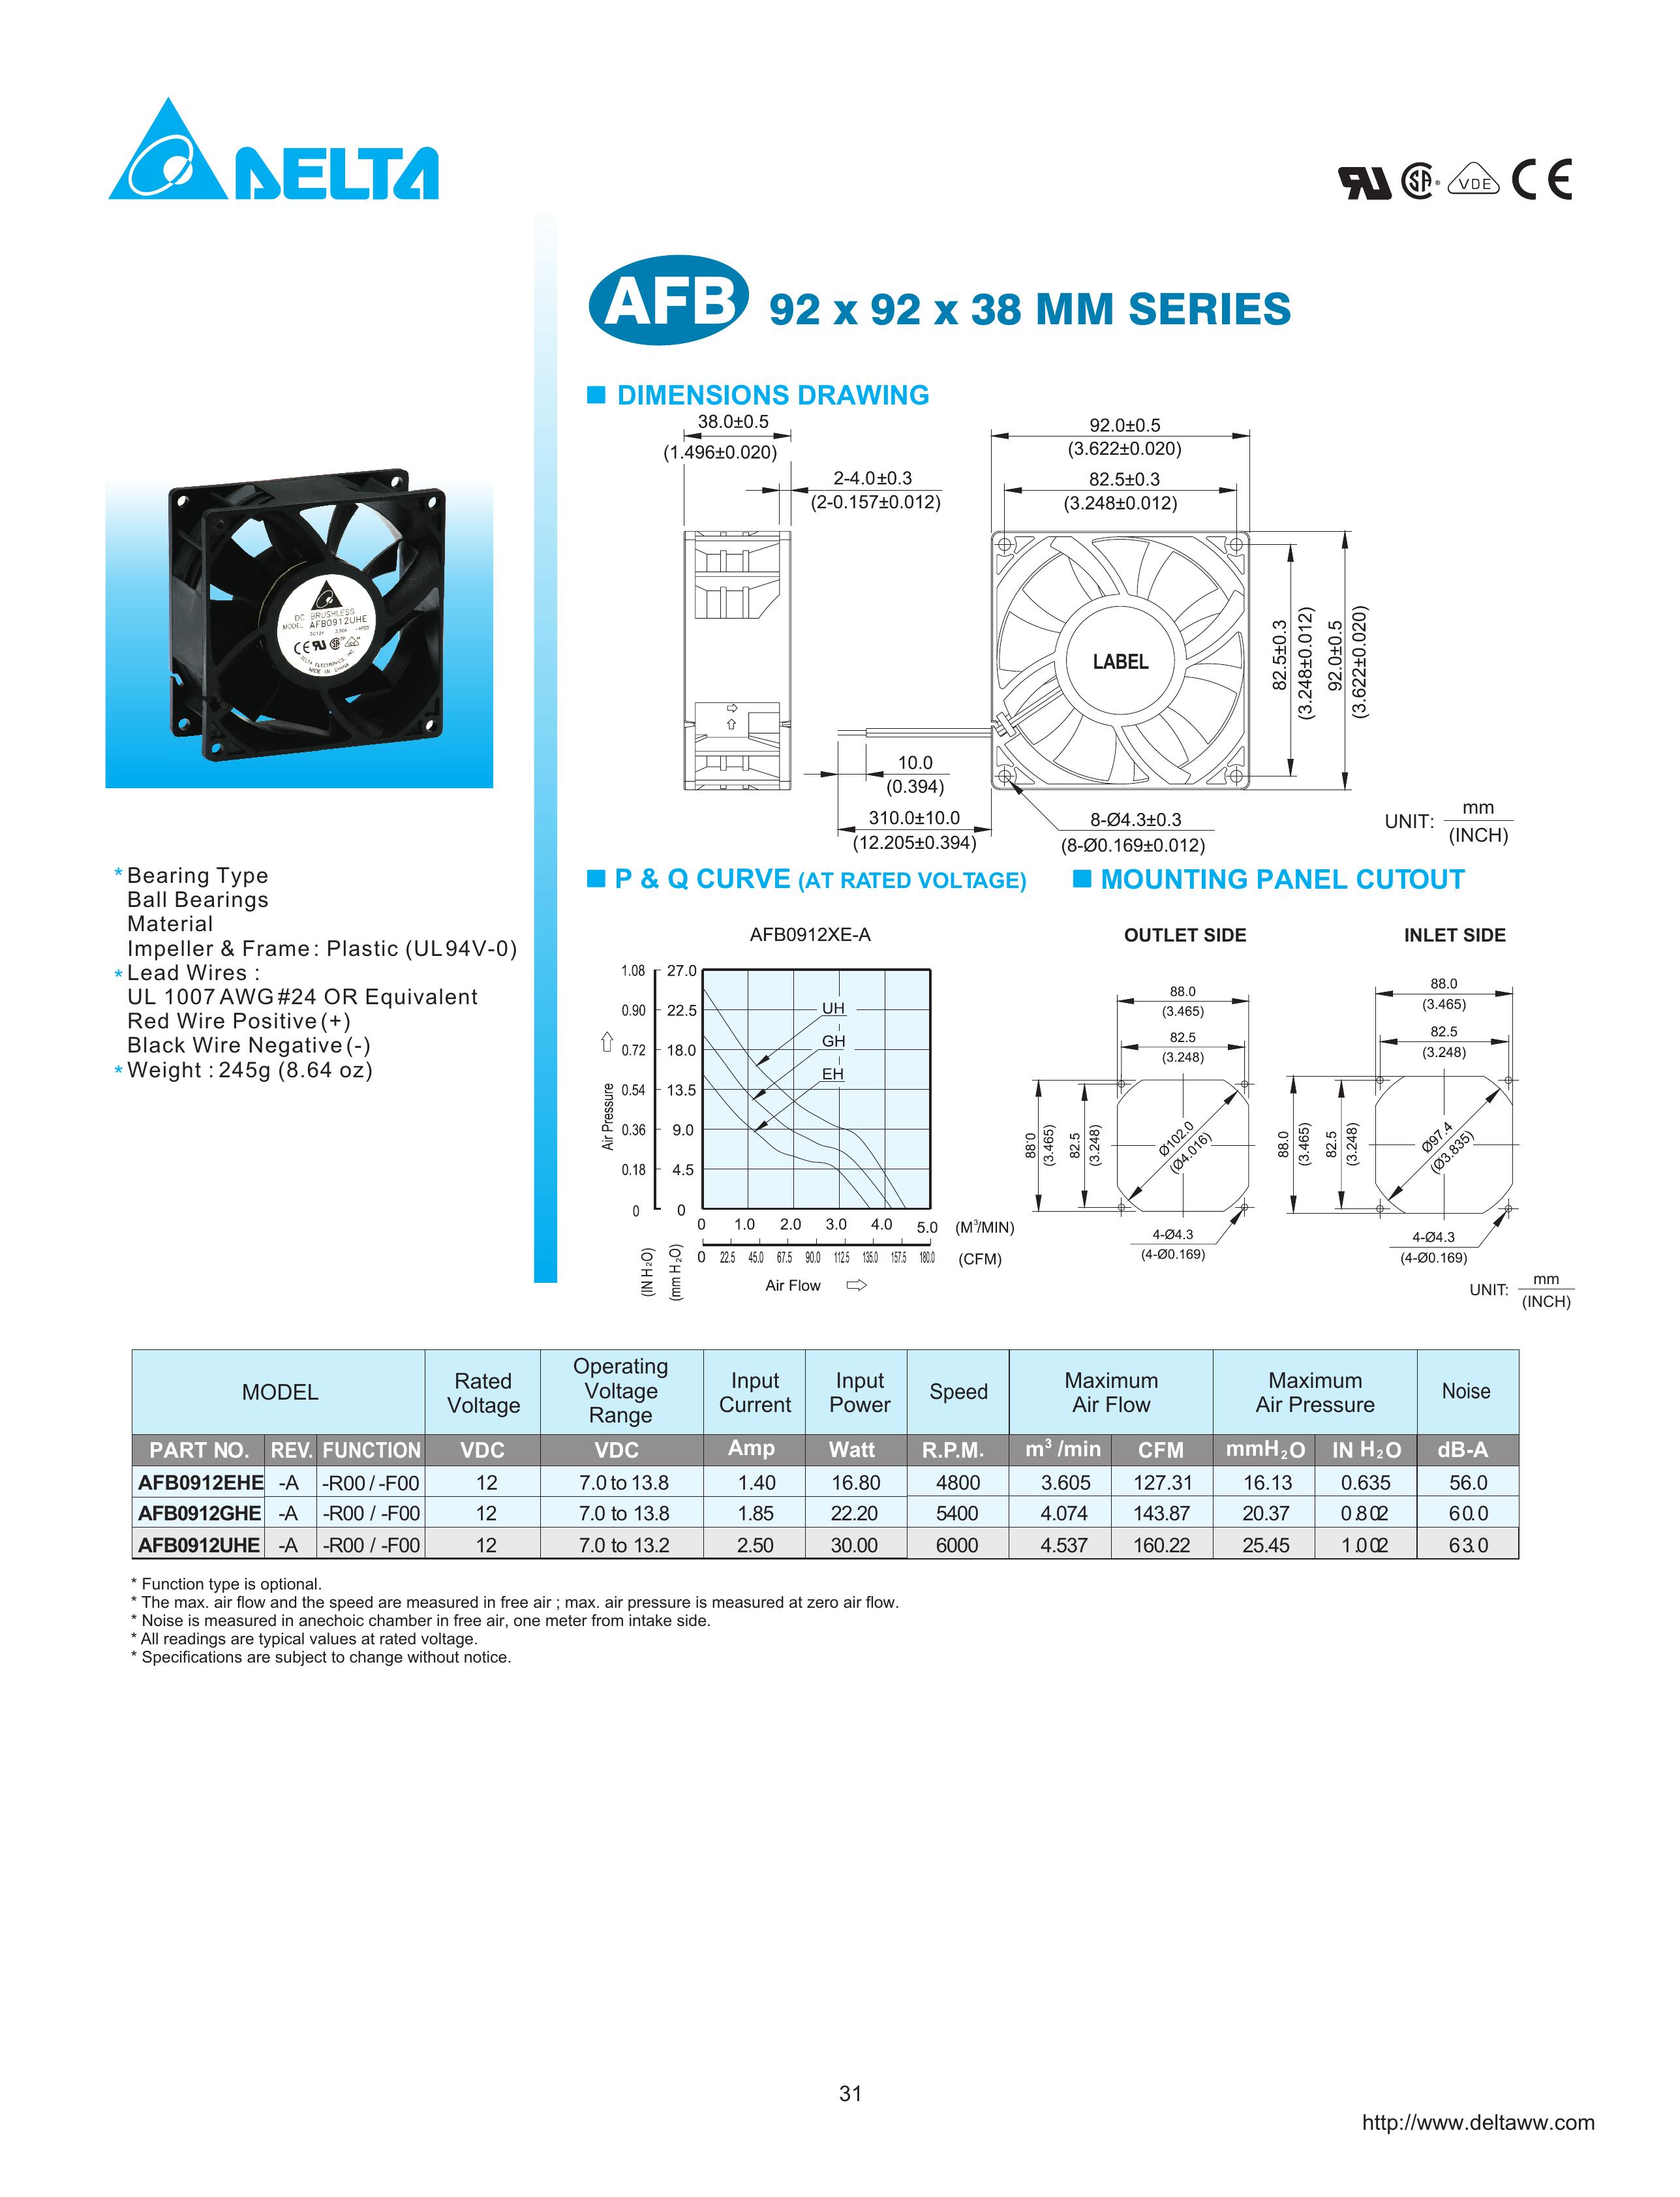 Delta Electronics AFB0912GHE Ventilation Hood User Manual